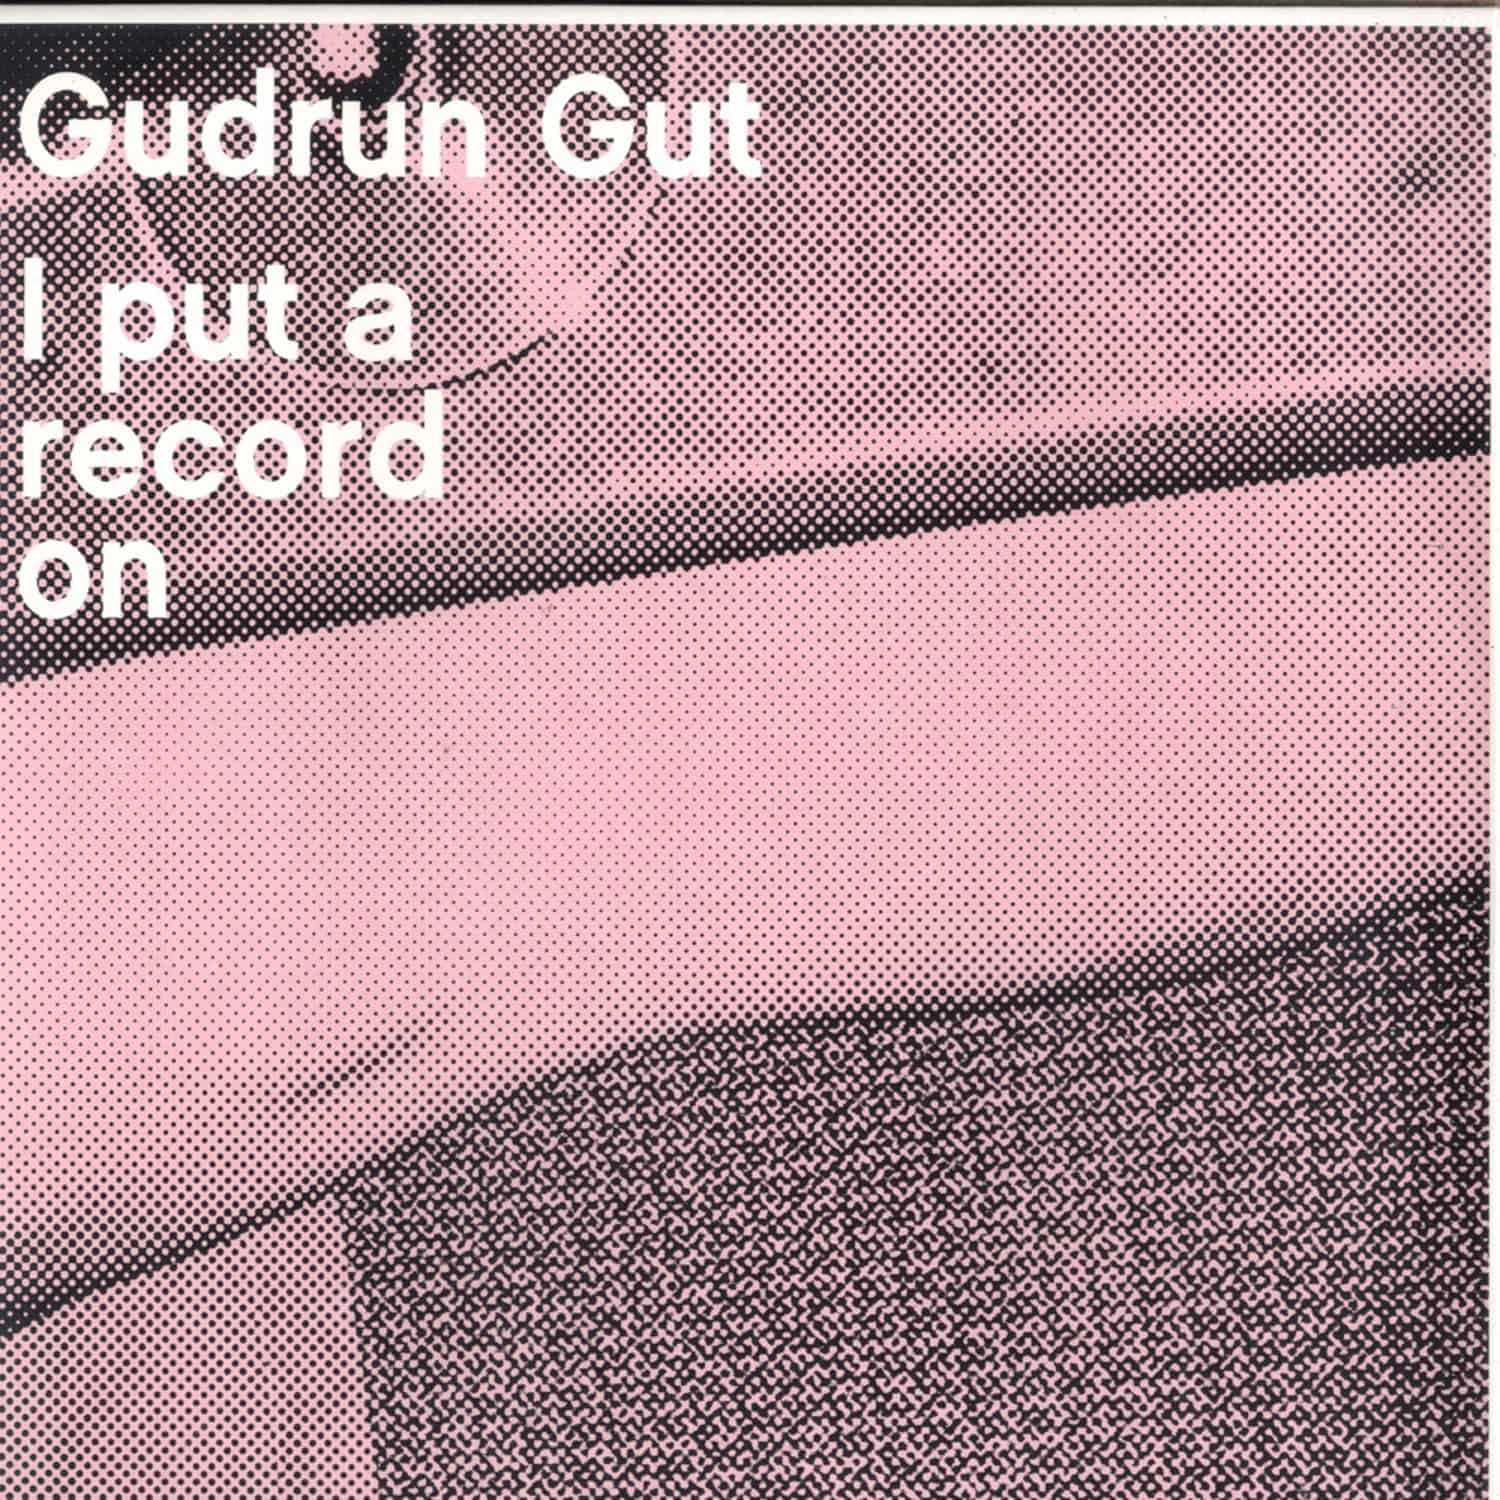 Gudrun Gut - I PUT A RECORD ON 